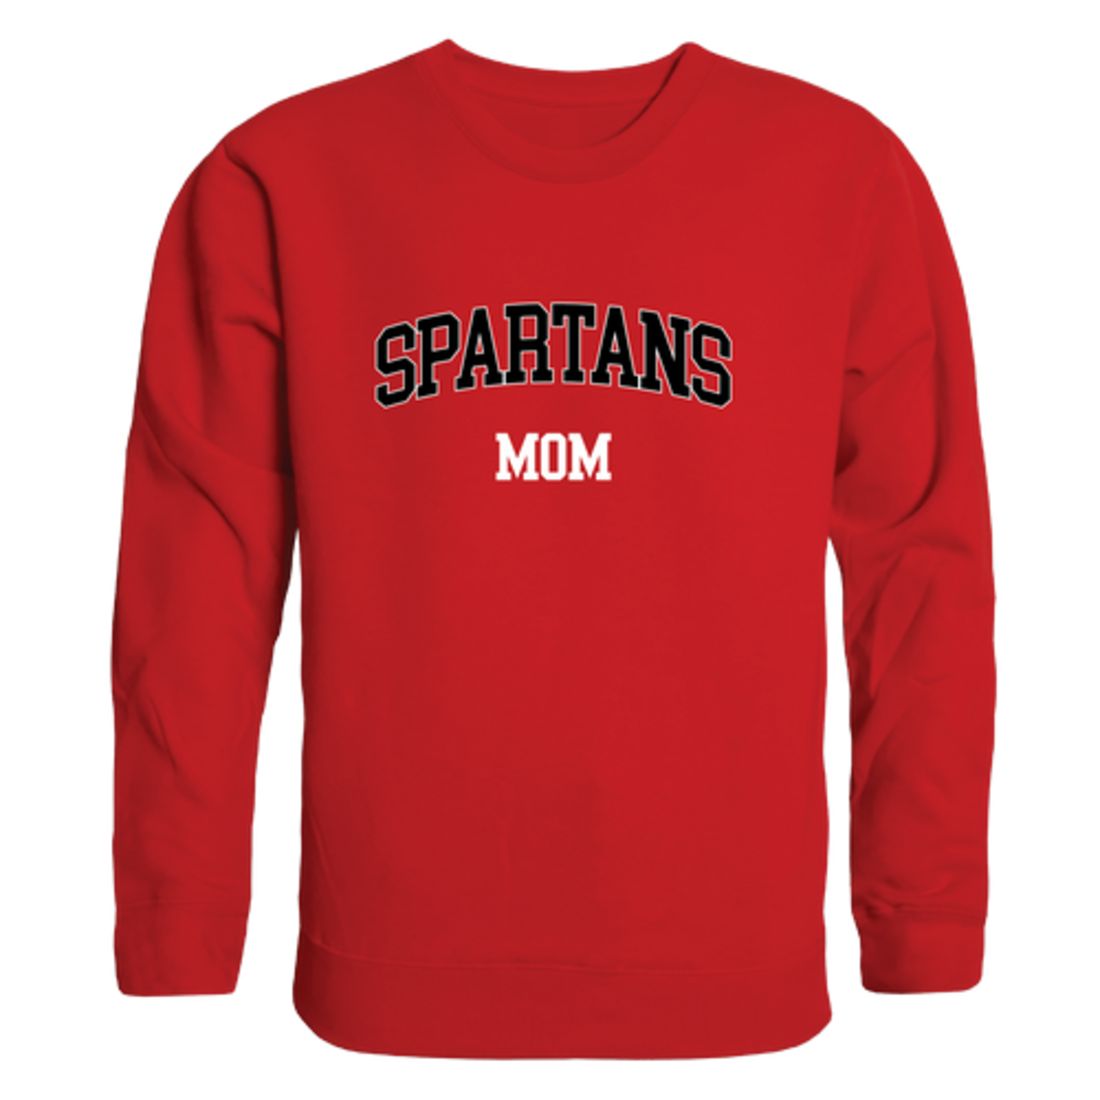 University of Tampa Spartans Mom Crewneck Sweatshirt